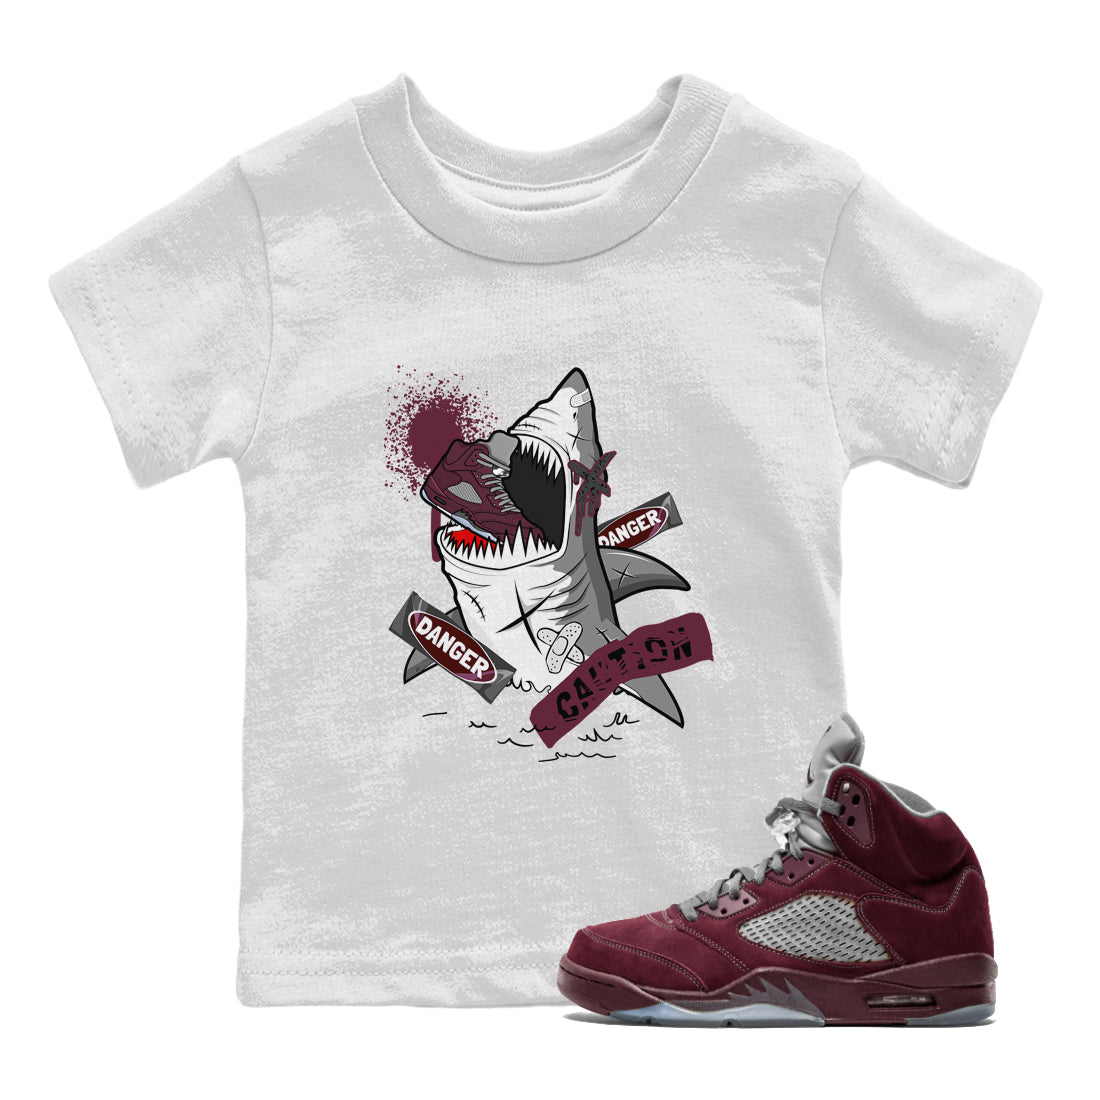 5s Burgundy shirt to match jordans Dangerous Shark Streetwear Sneaker Shirt Air Jordan 5 Burgundy Drip Gear Zone Sneaker Matching Clothing Baby Toddler White 1 T-Shirt